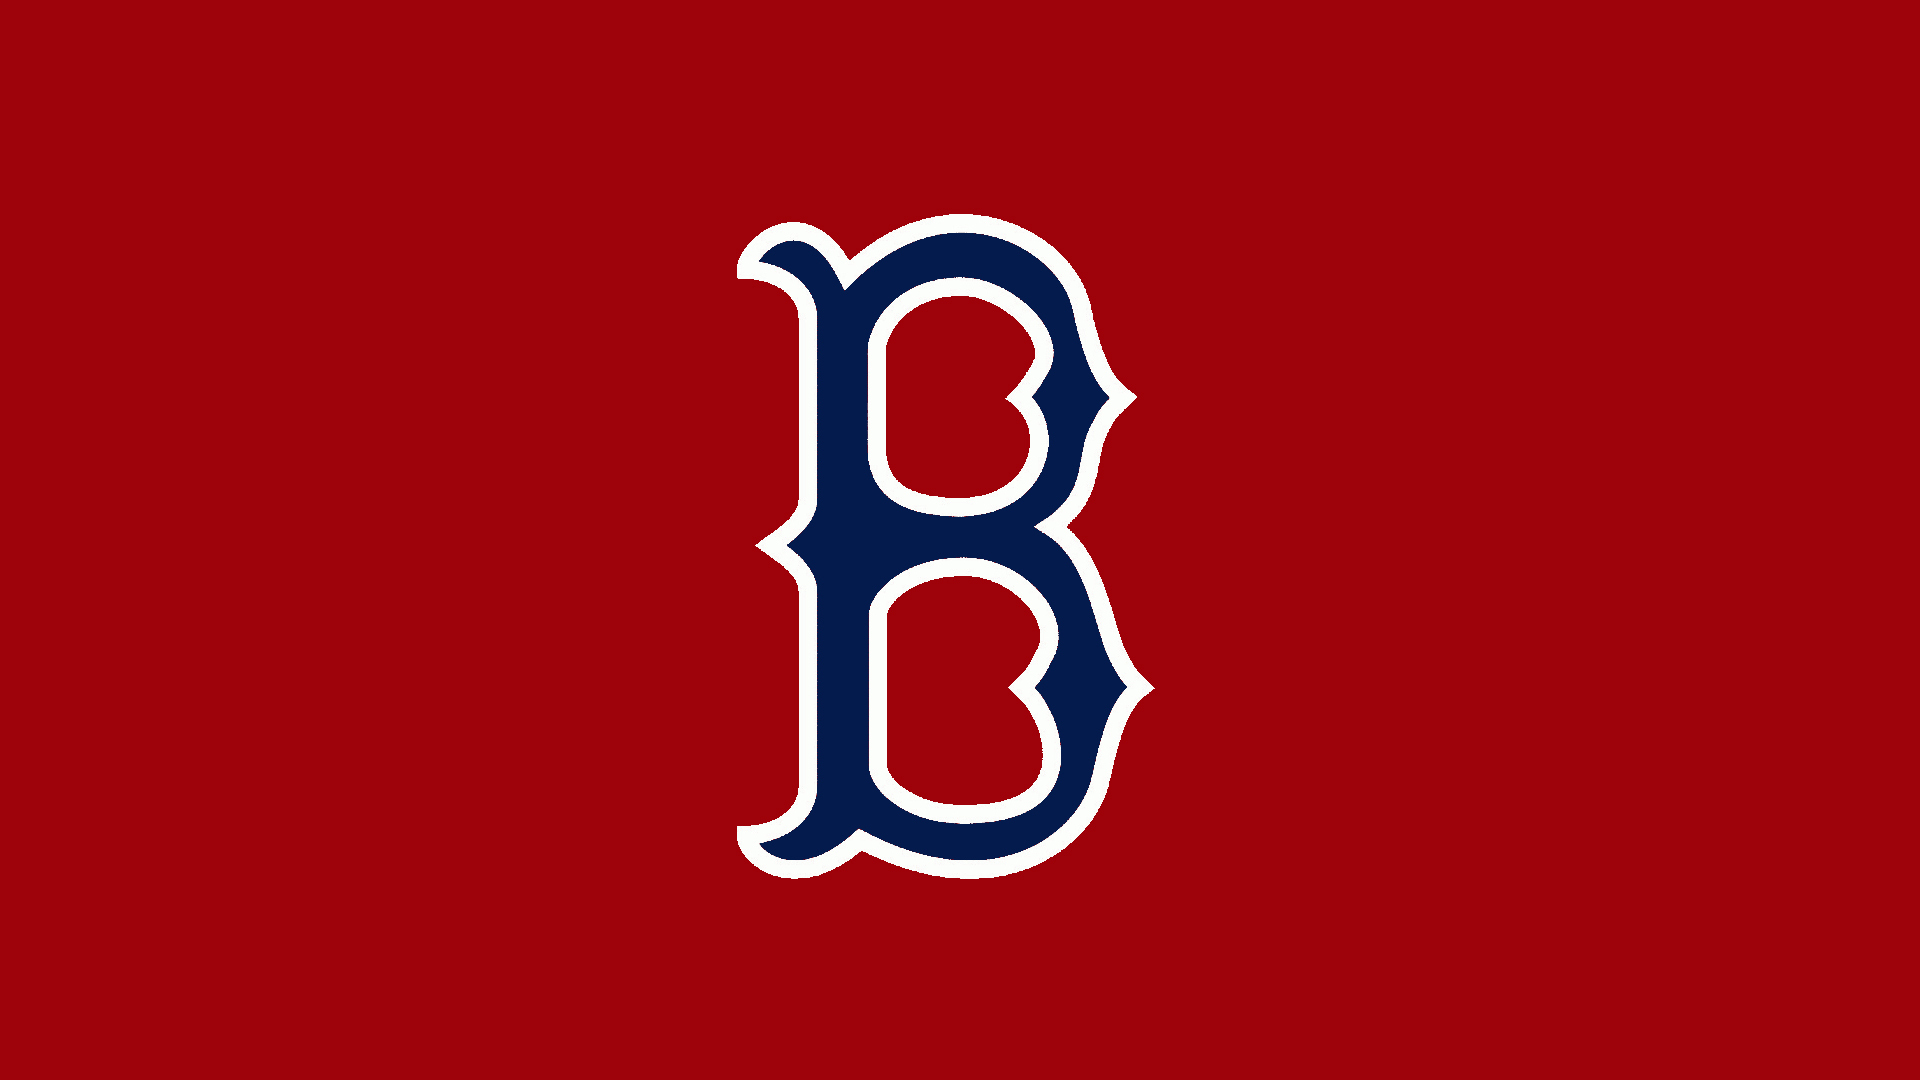 Download Red Sox Jerseys Wallpaper